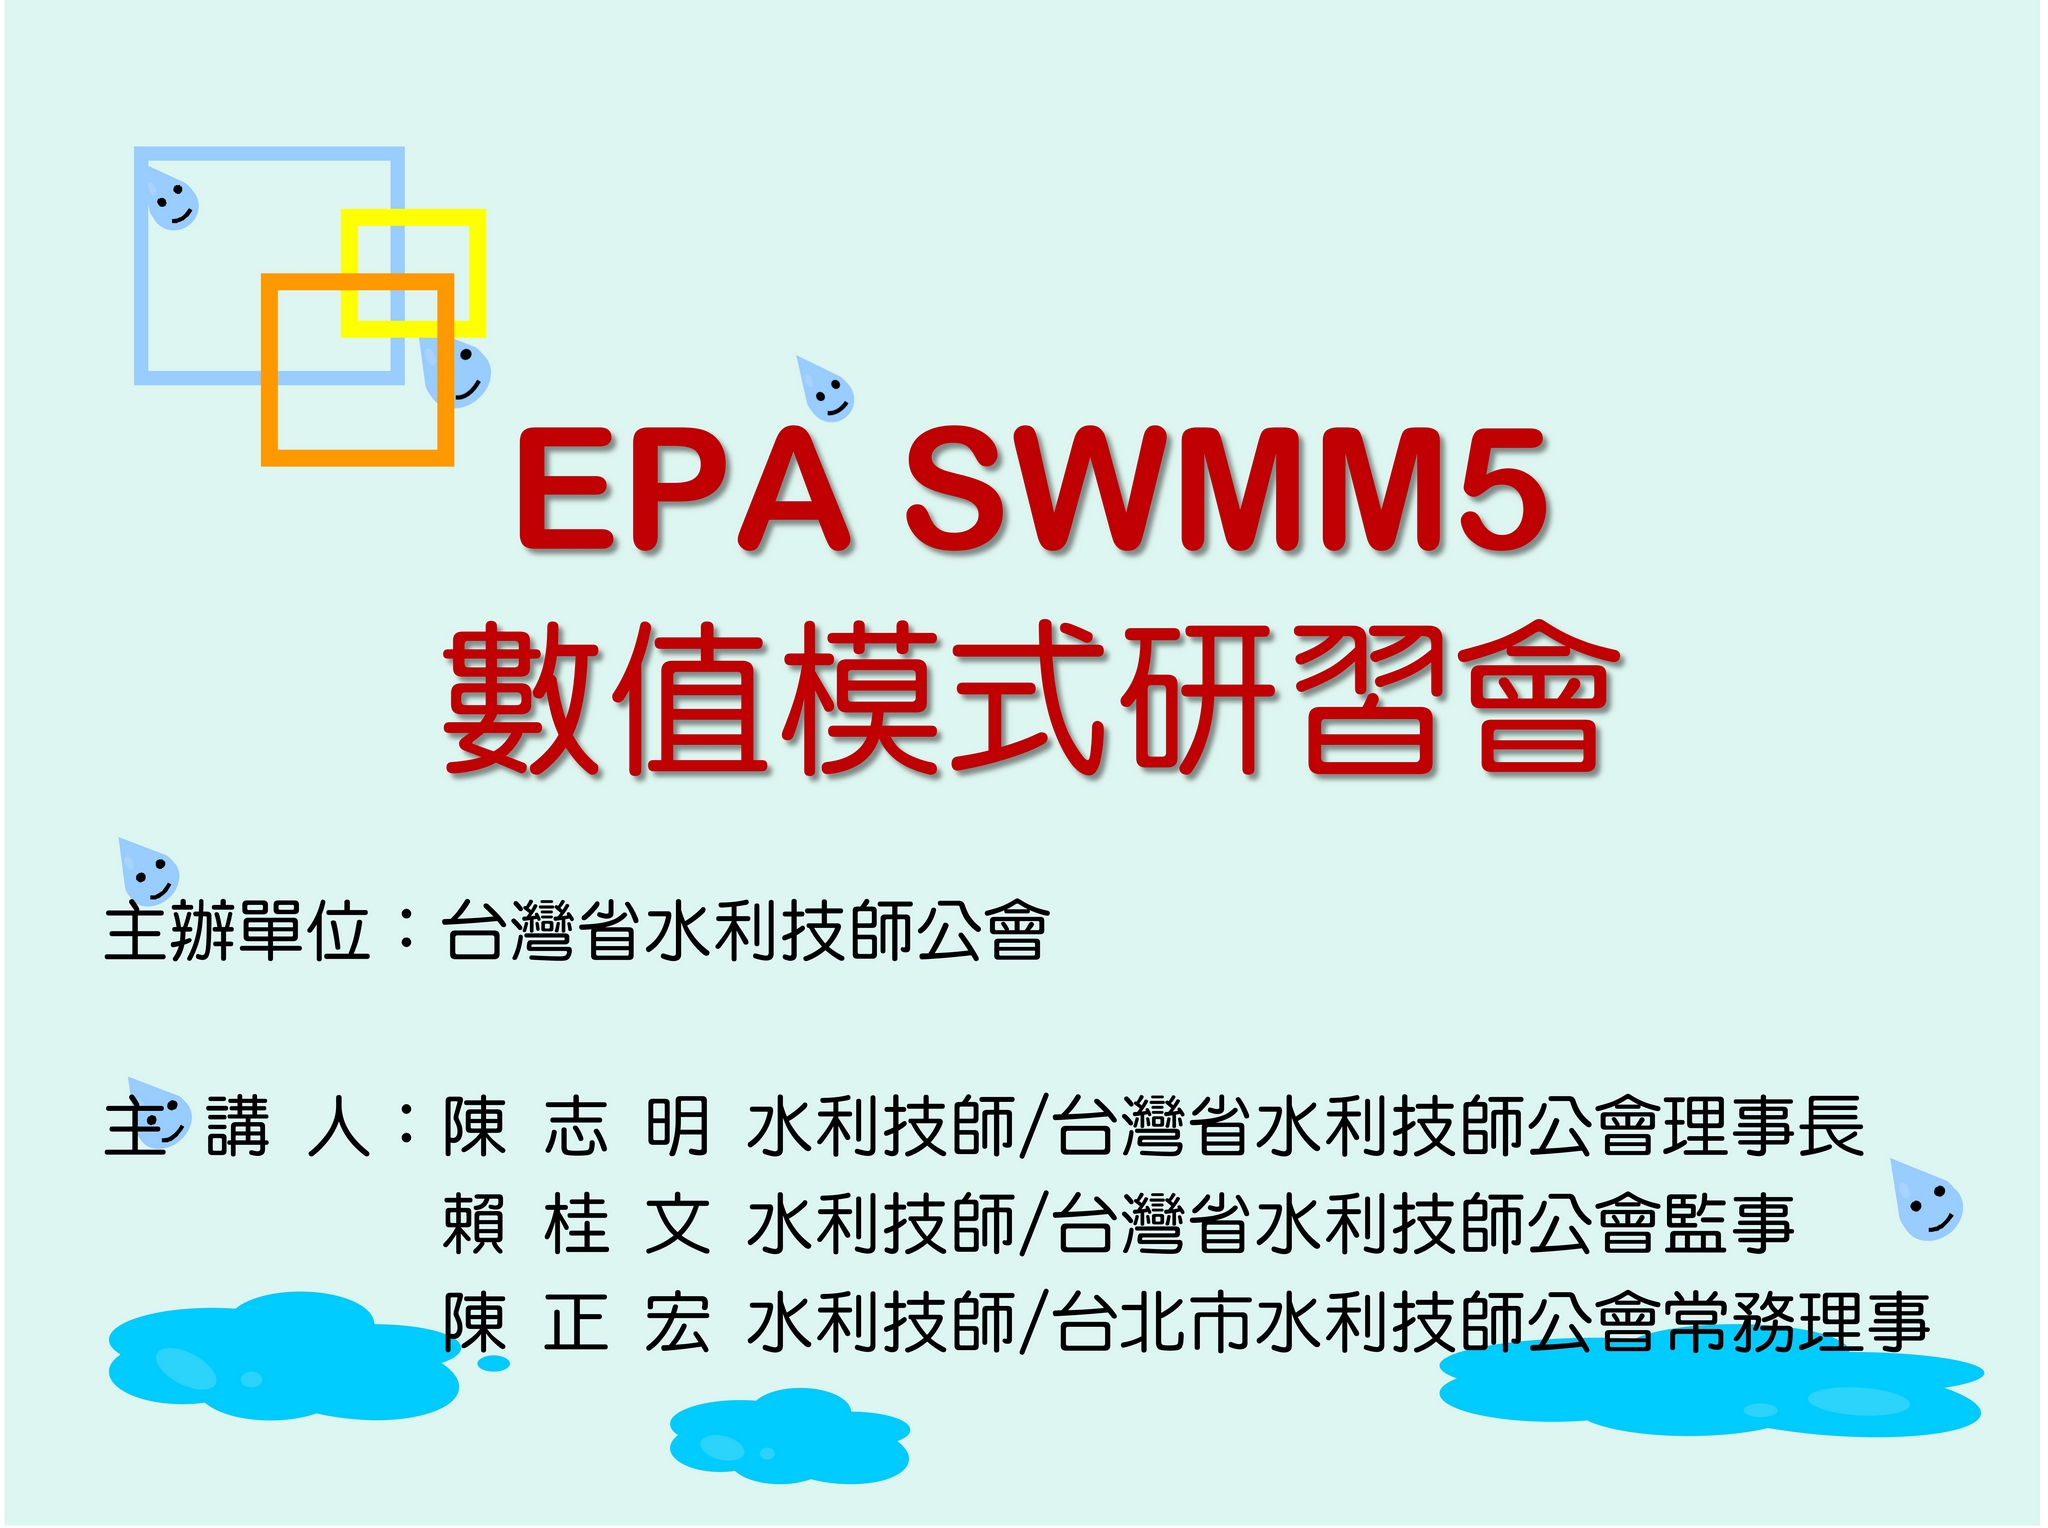 EPA SWMM5 研討會課程